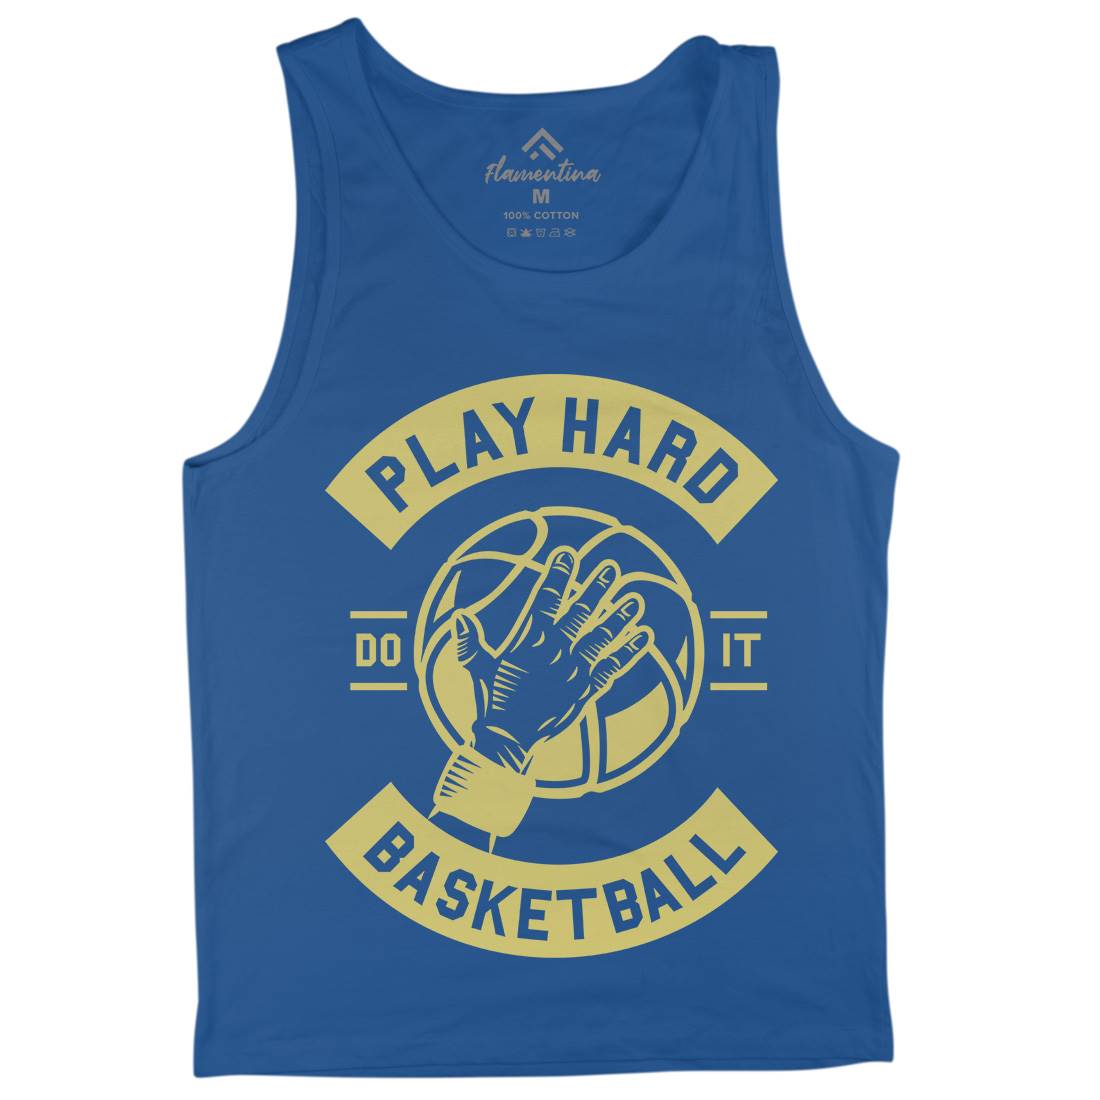 Play Hard Basketball Mens Tank Top Vest Sport A261